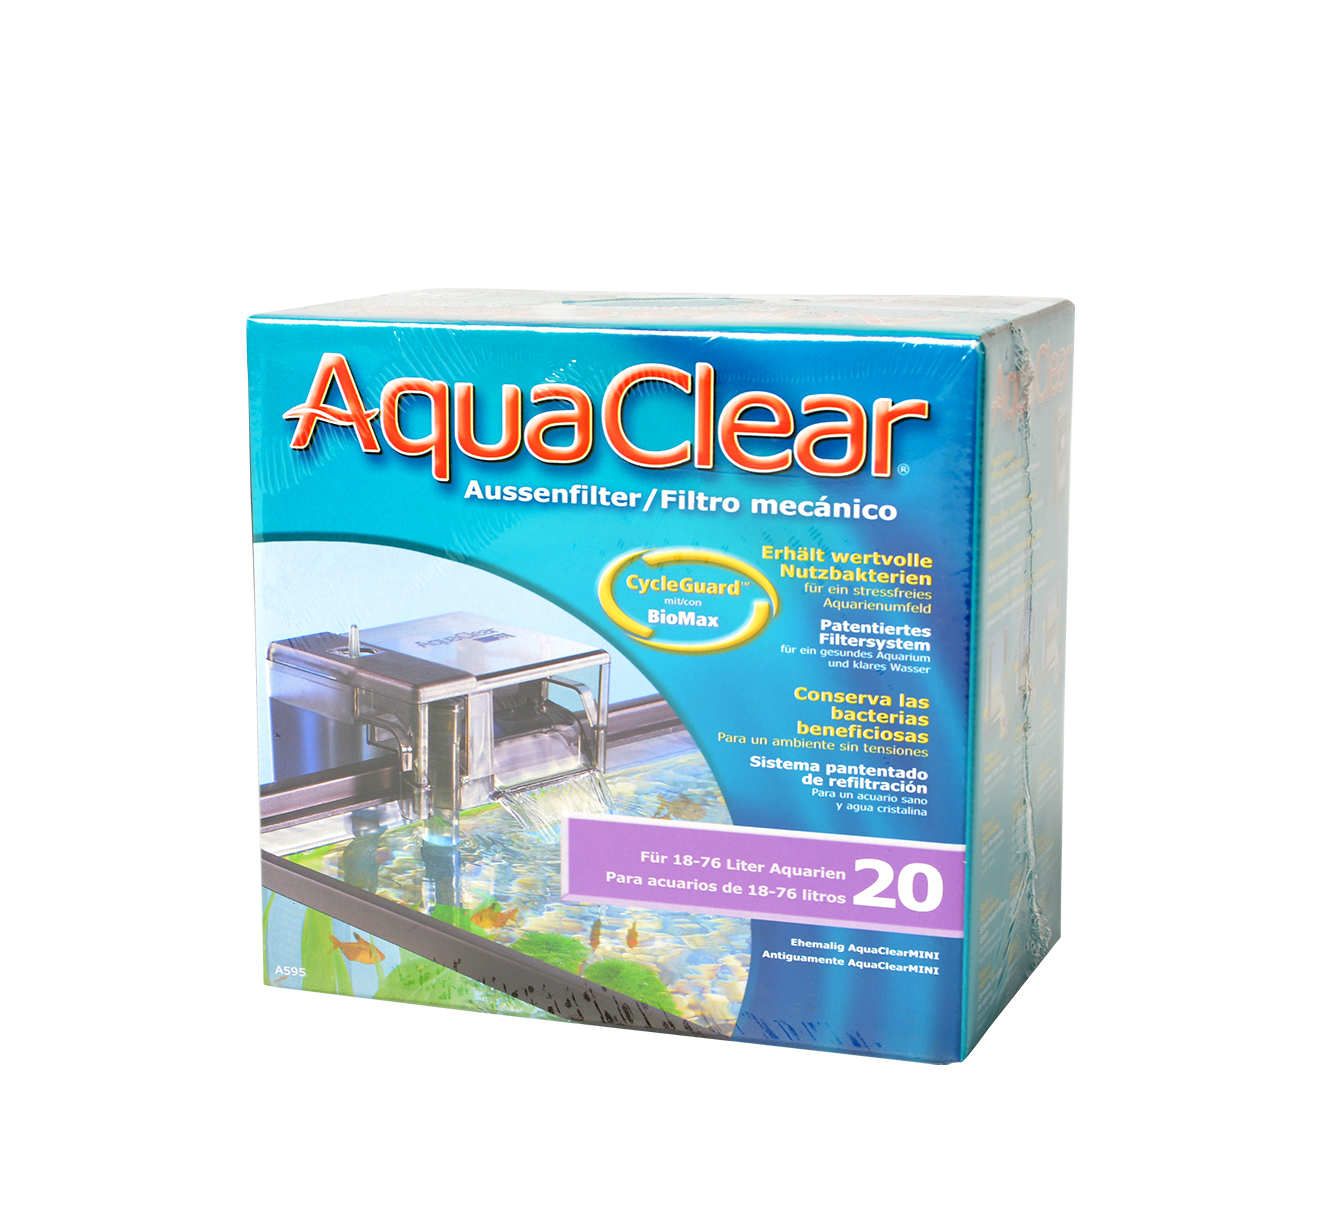 Aquaclear 20 power filter - Product shot